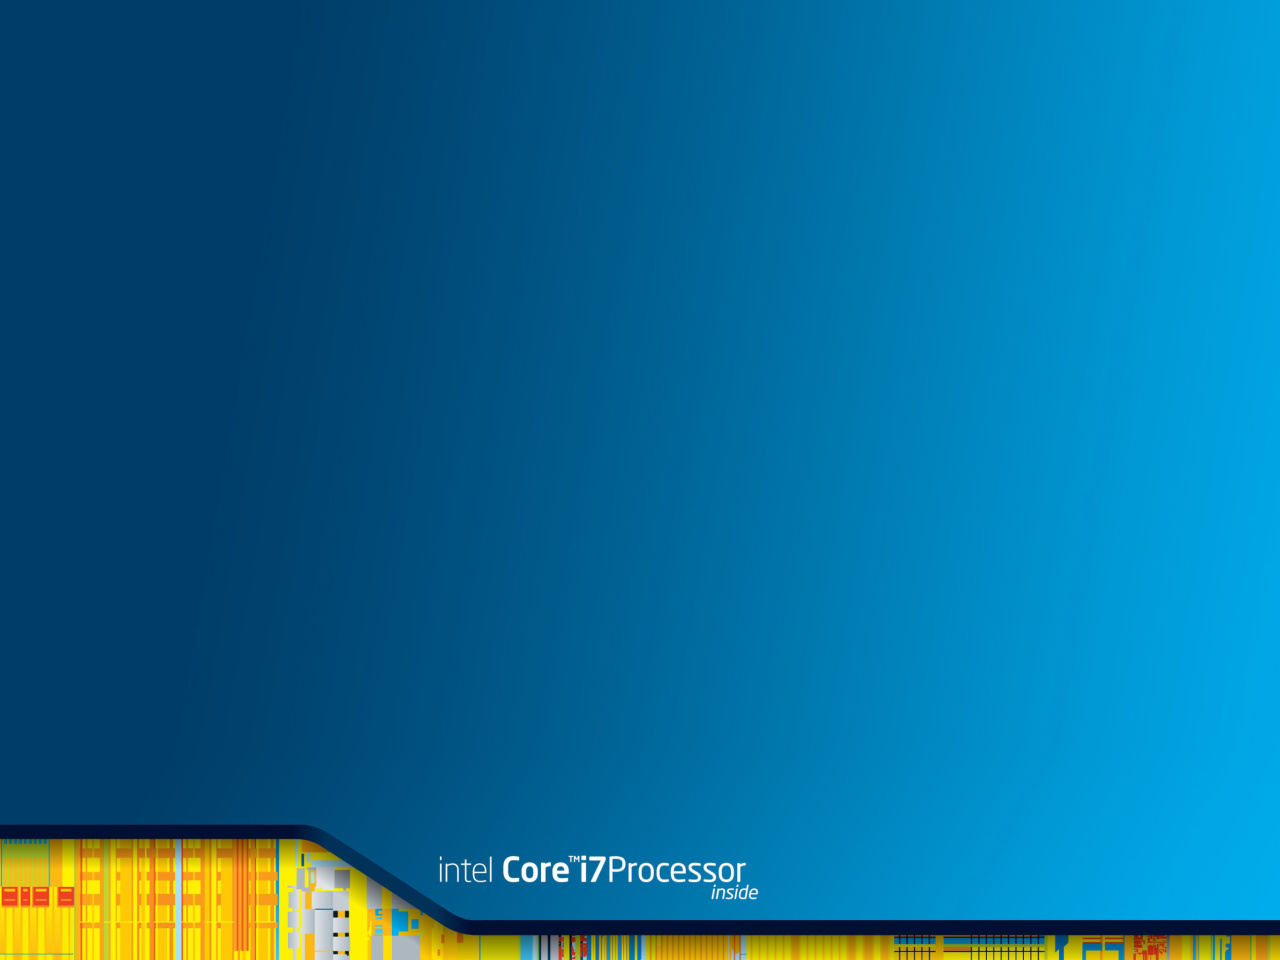 Intel Core I7 Processor Wallpaper For Android 1280x960